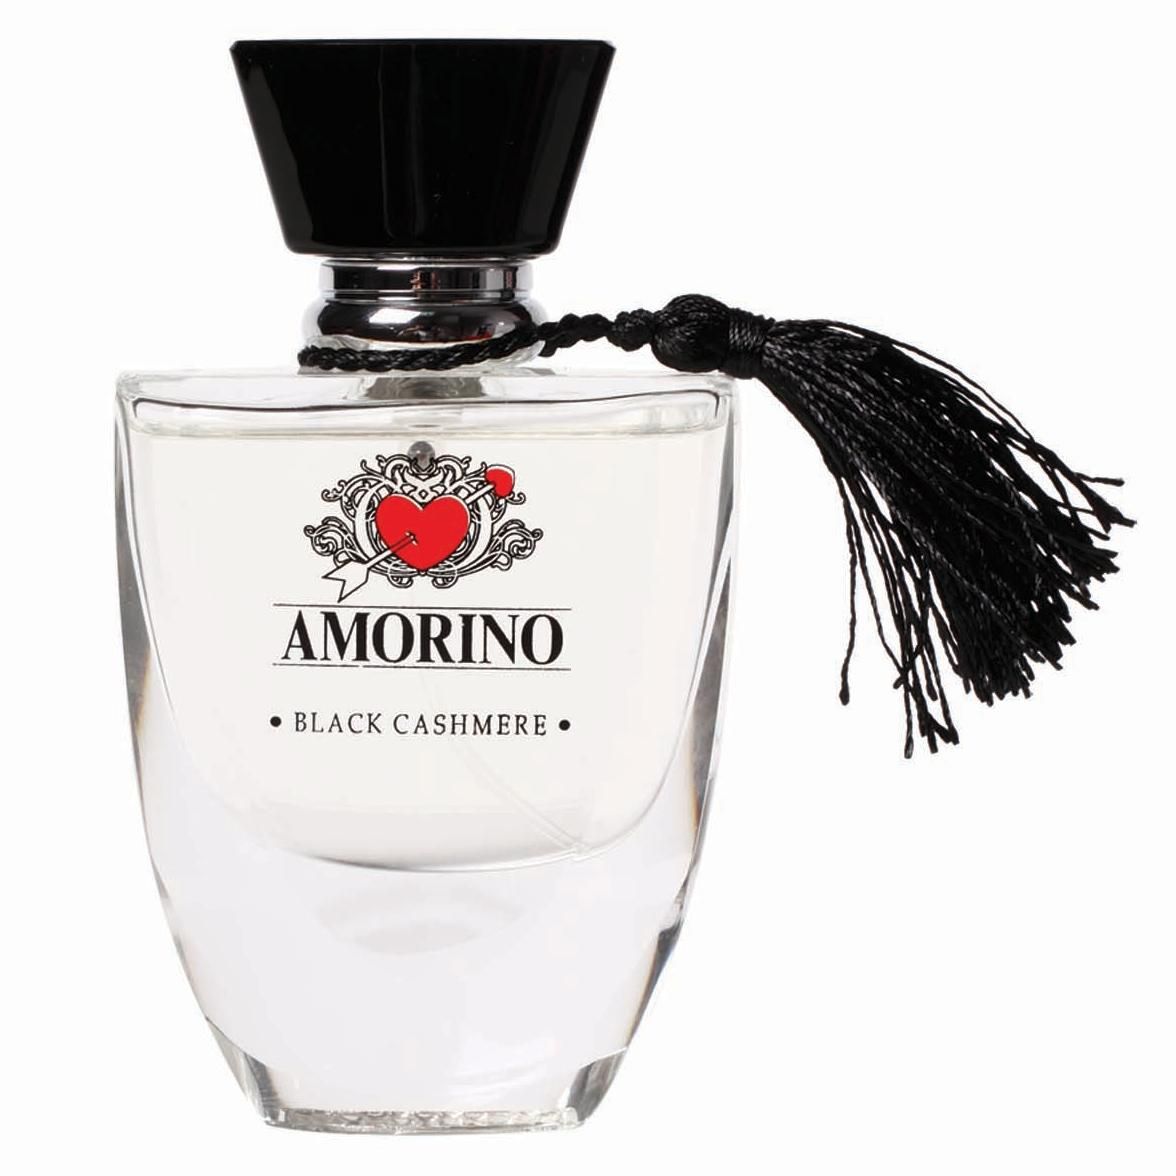 Amorino Black Cashmere